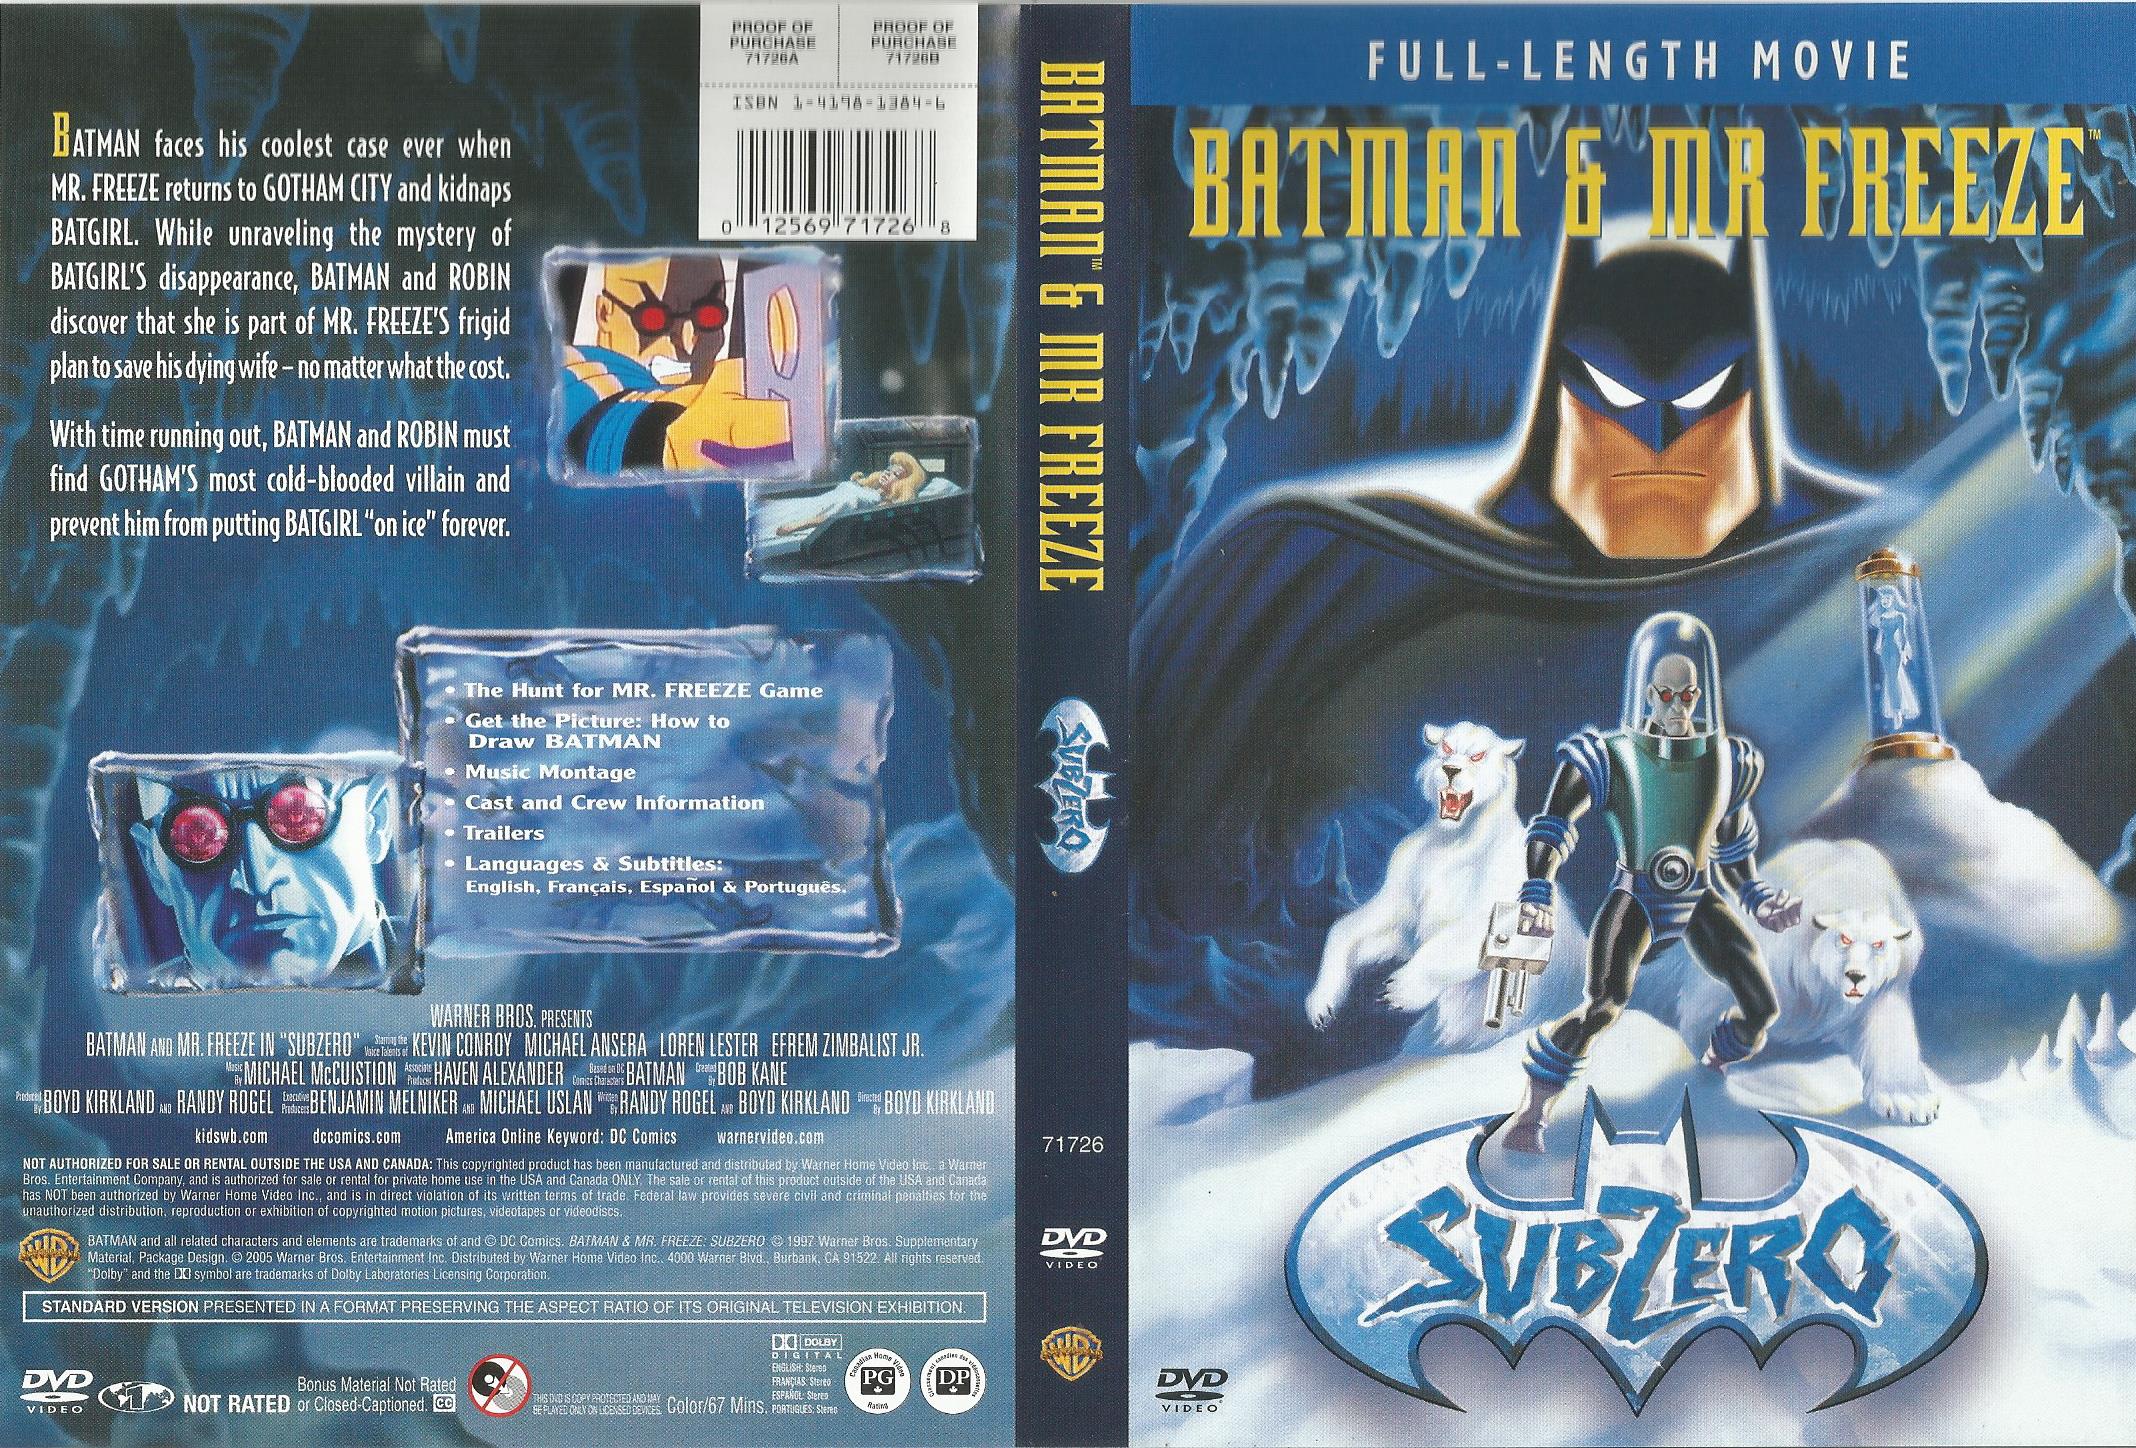 Jaquette DVD Batman & Mr Freeze subzero zone 1